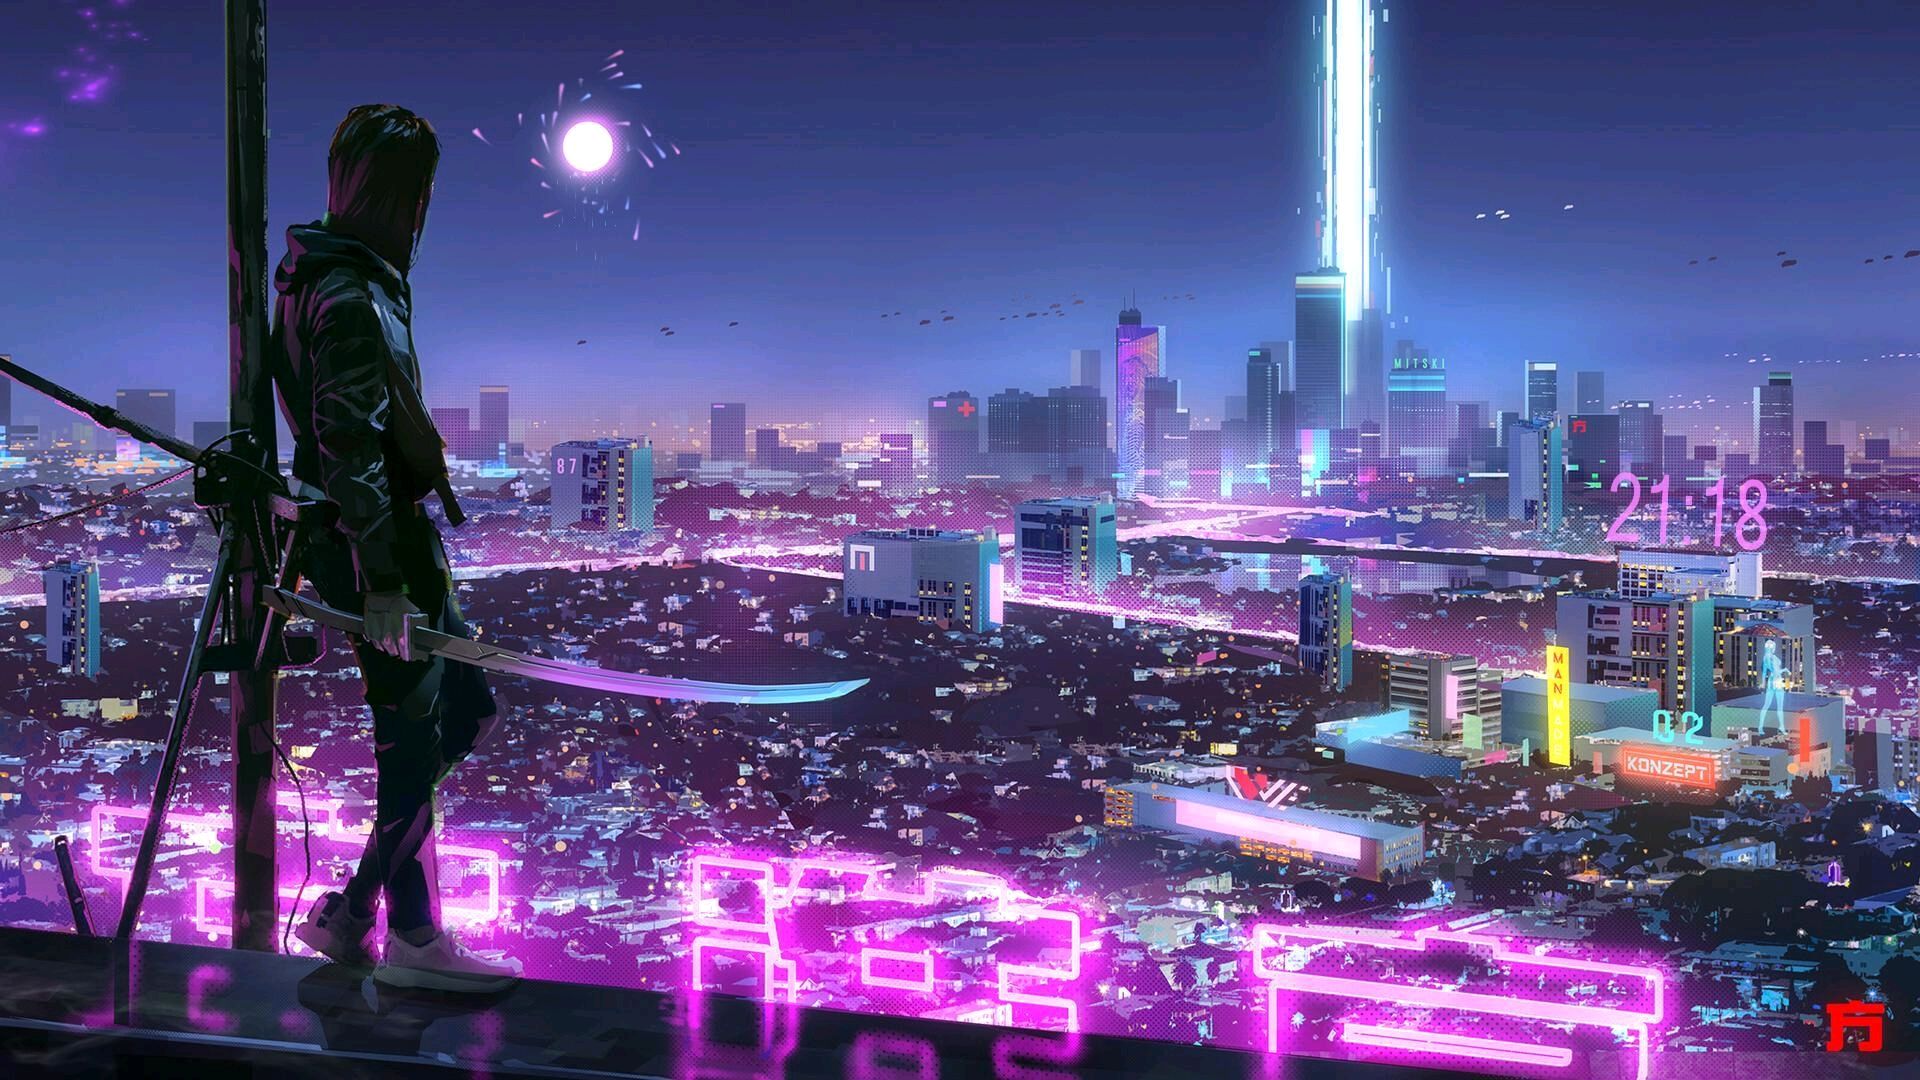 Cyberpunk sci-fi futuristic mobile wallpaper background image WeChat QQ -  iNEWS